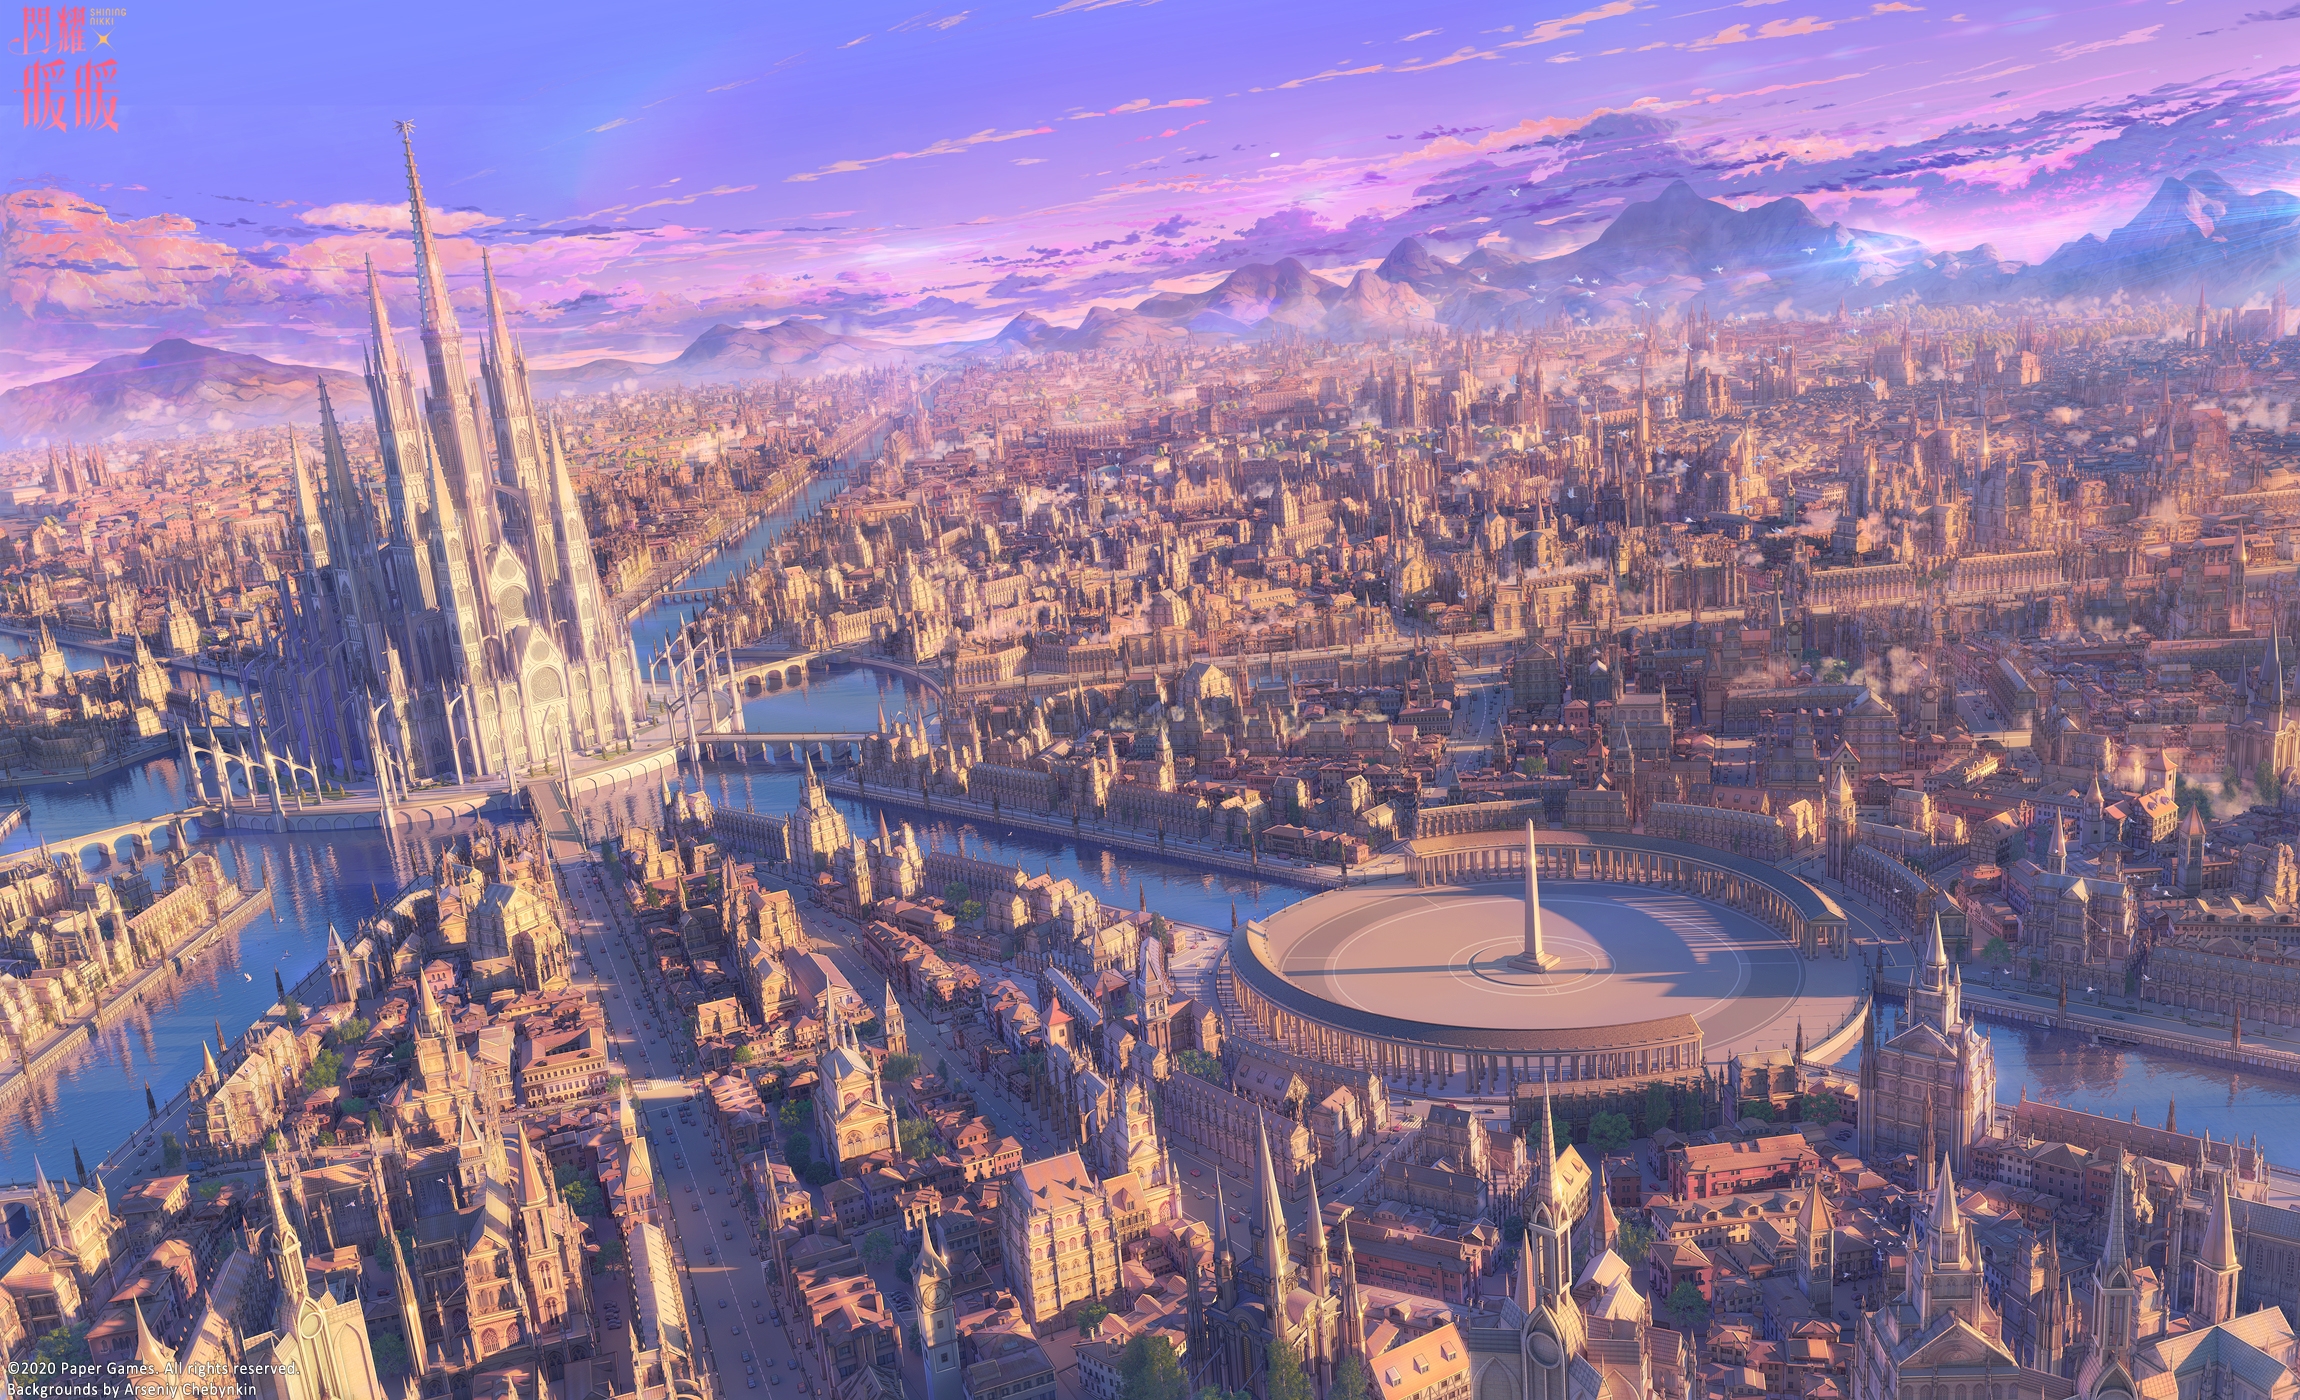 Wallpapers anime urban landscape Arsenixc fantastic world on the desktop